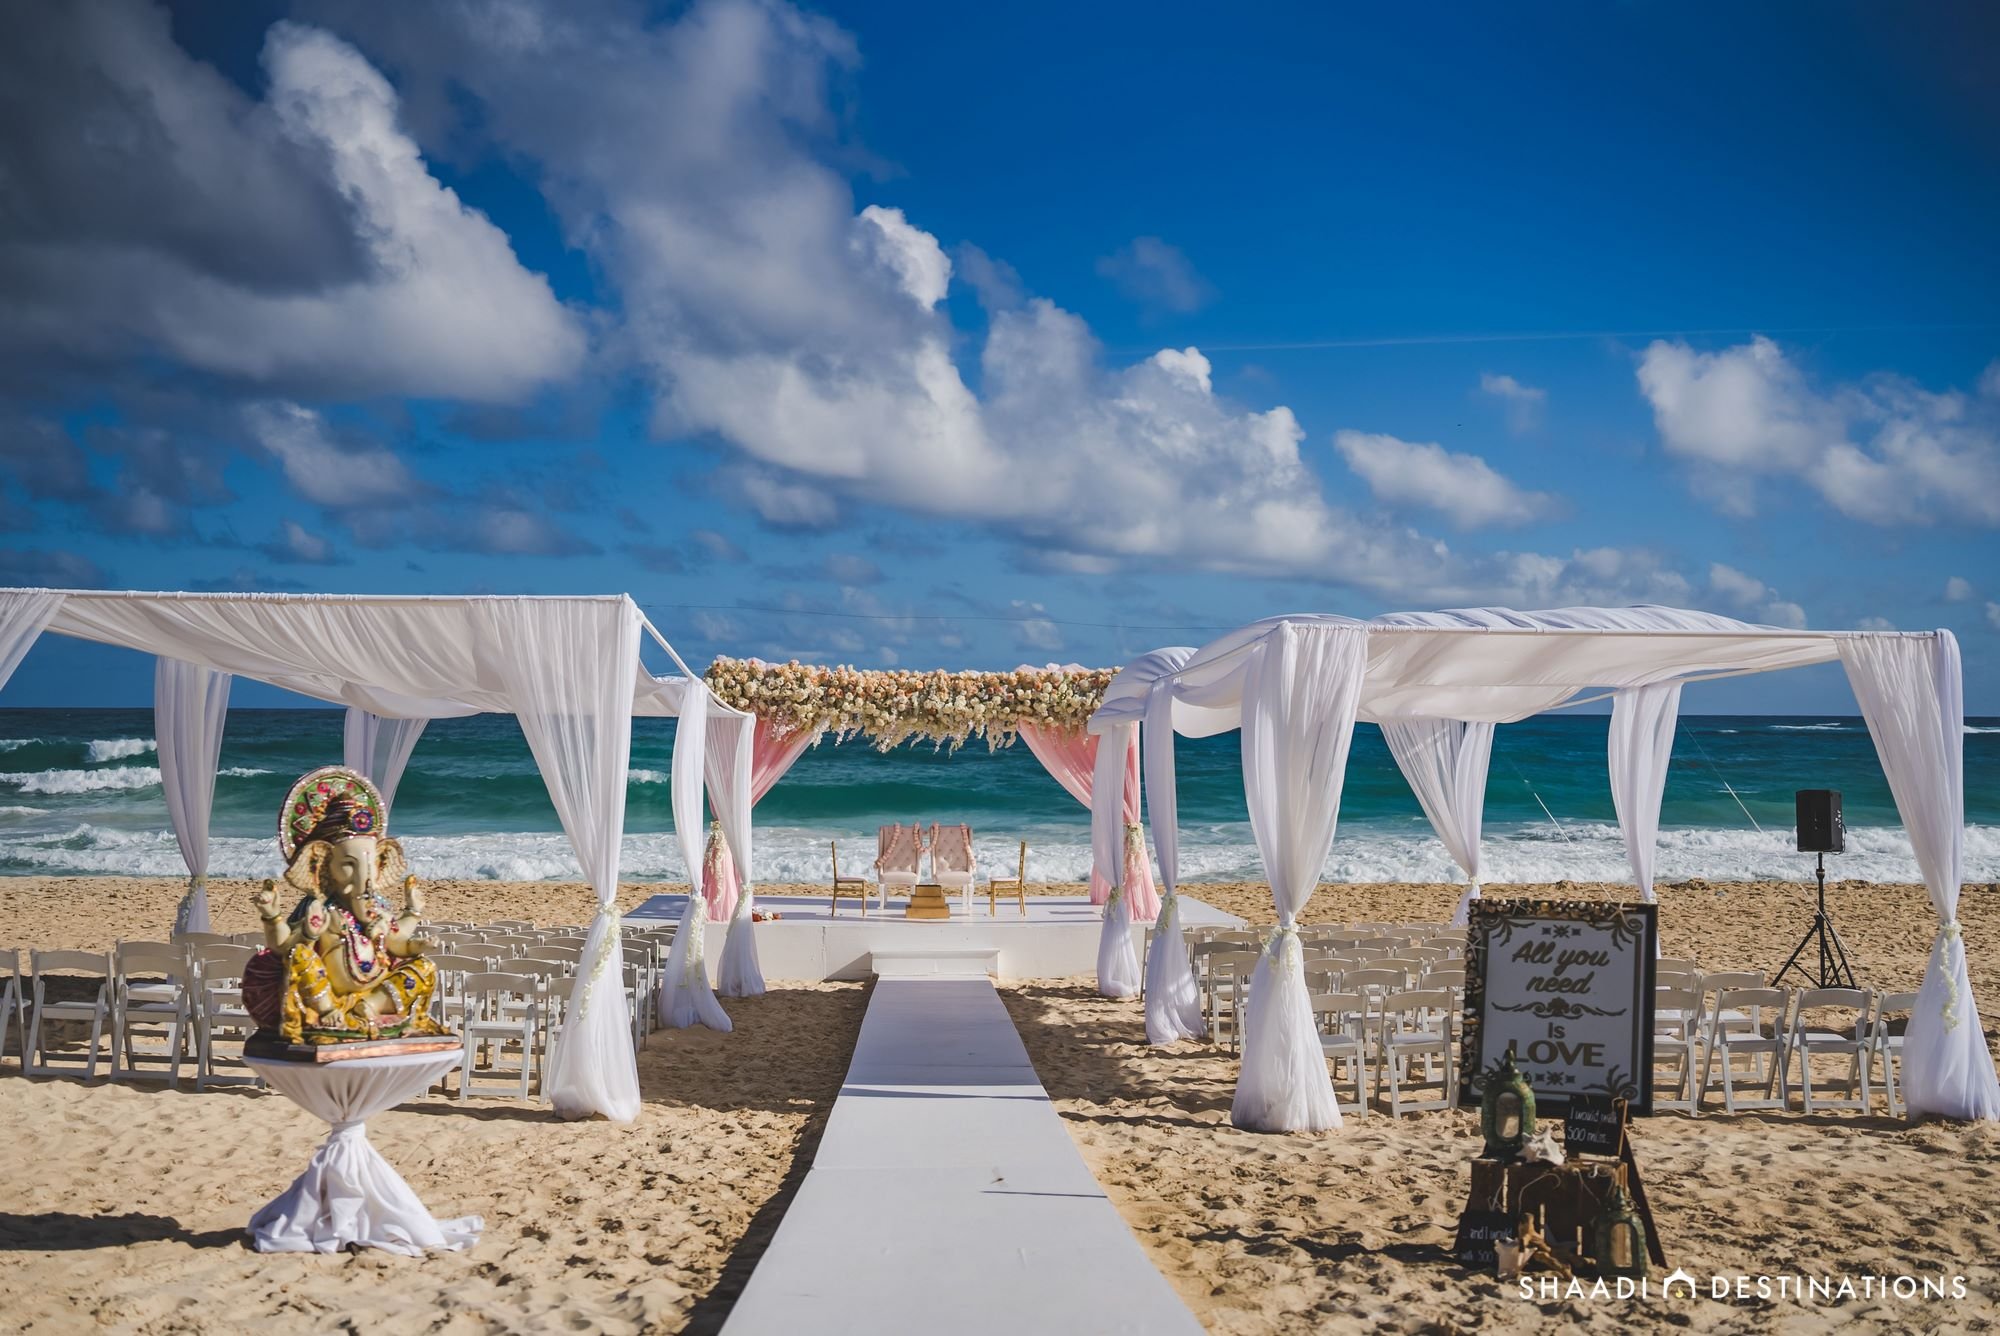 Indian Destination Wedding - Rushi + Anandi - Hard Rock Punta Cana - 44.jpg